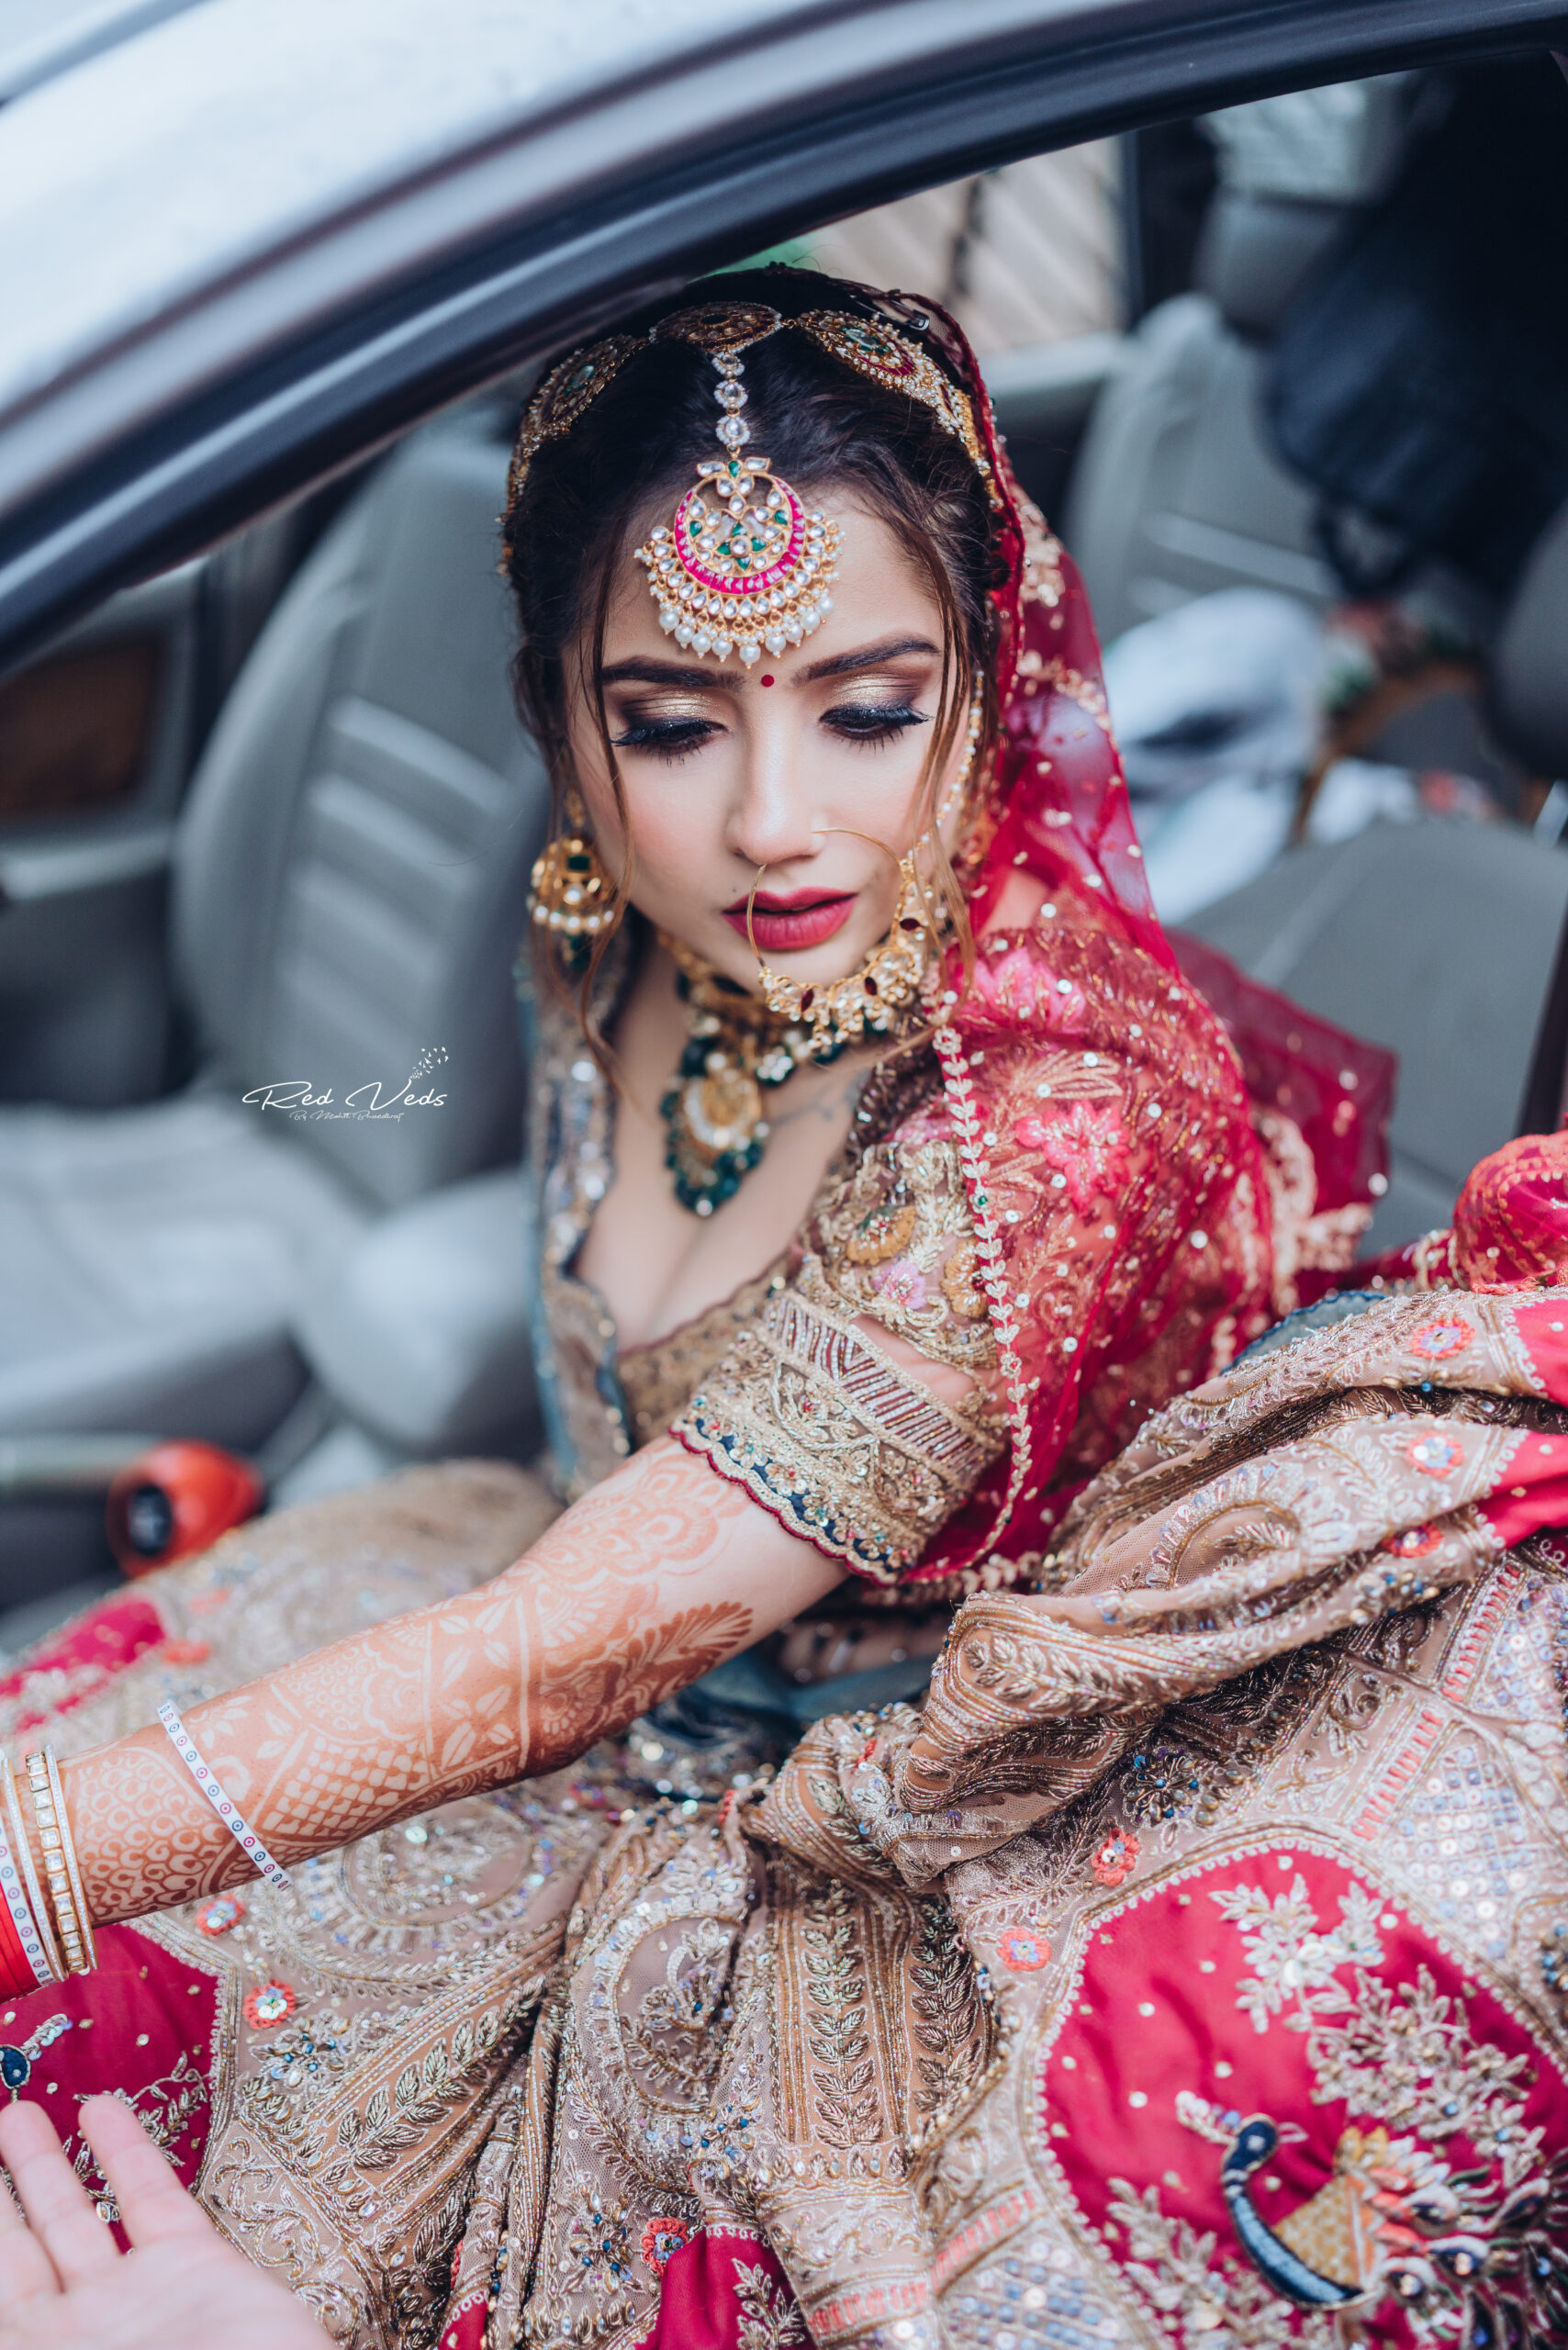 Creative Wedding Photography with Creative Poses